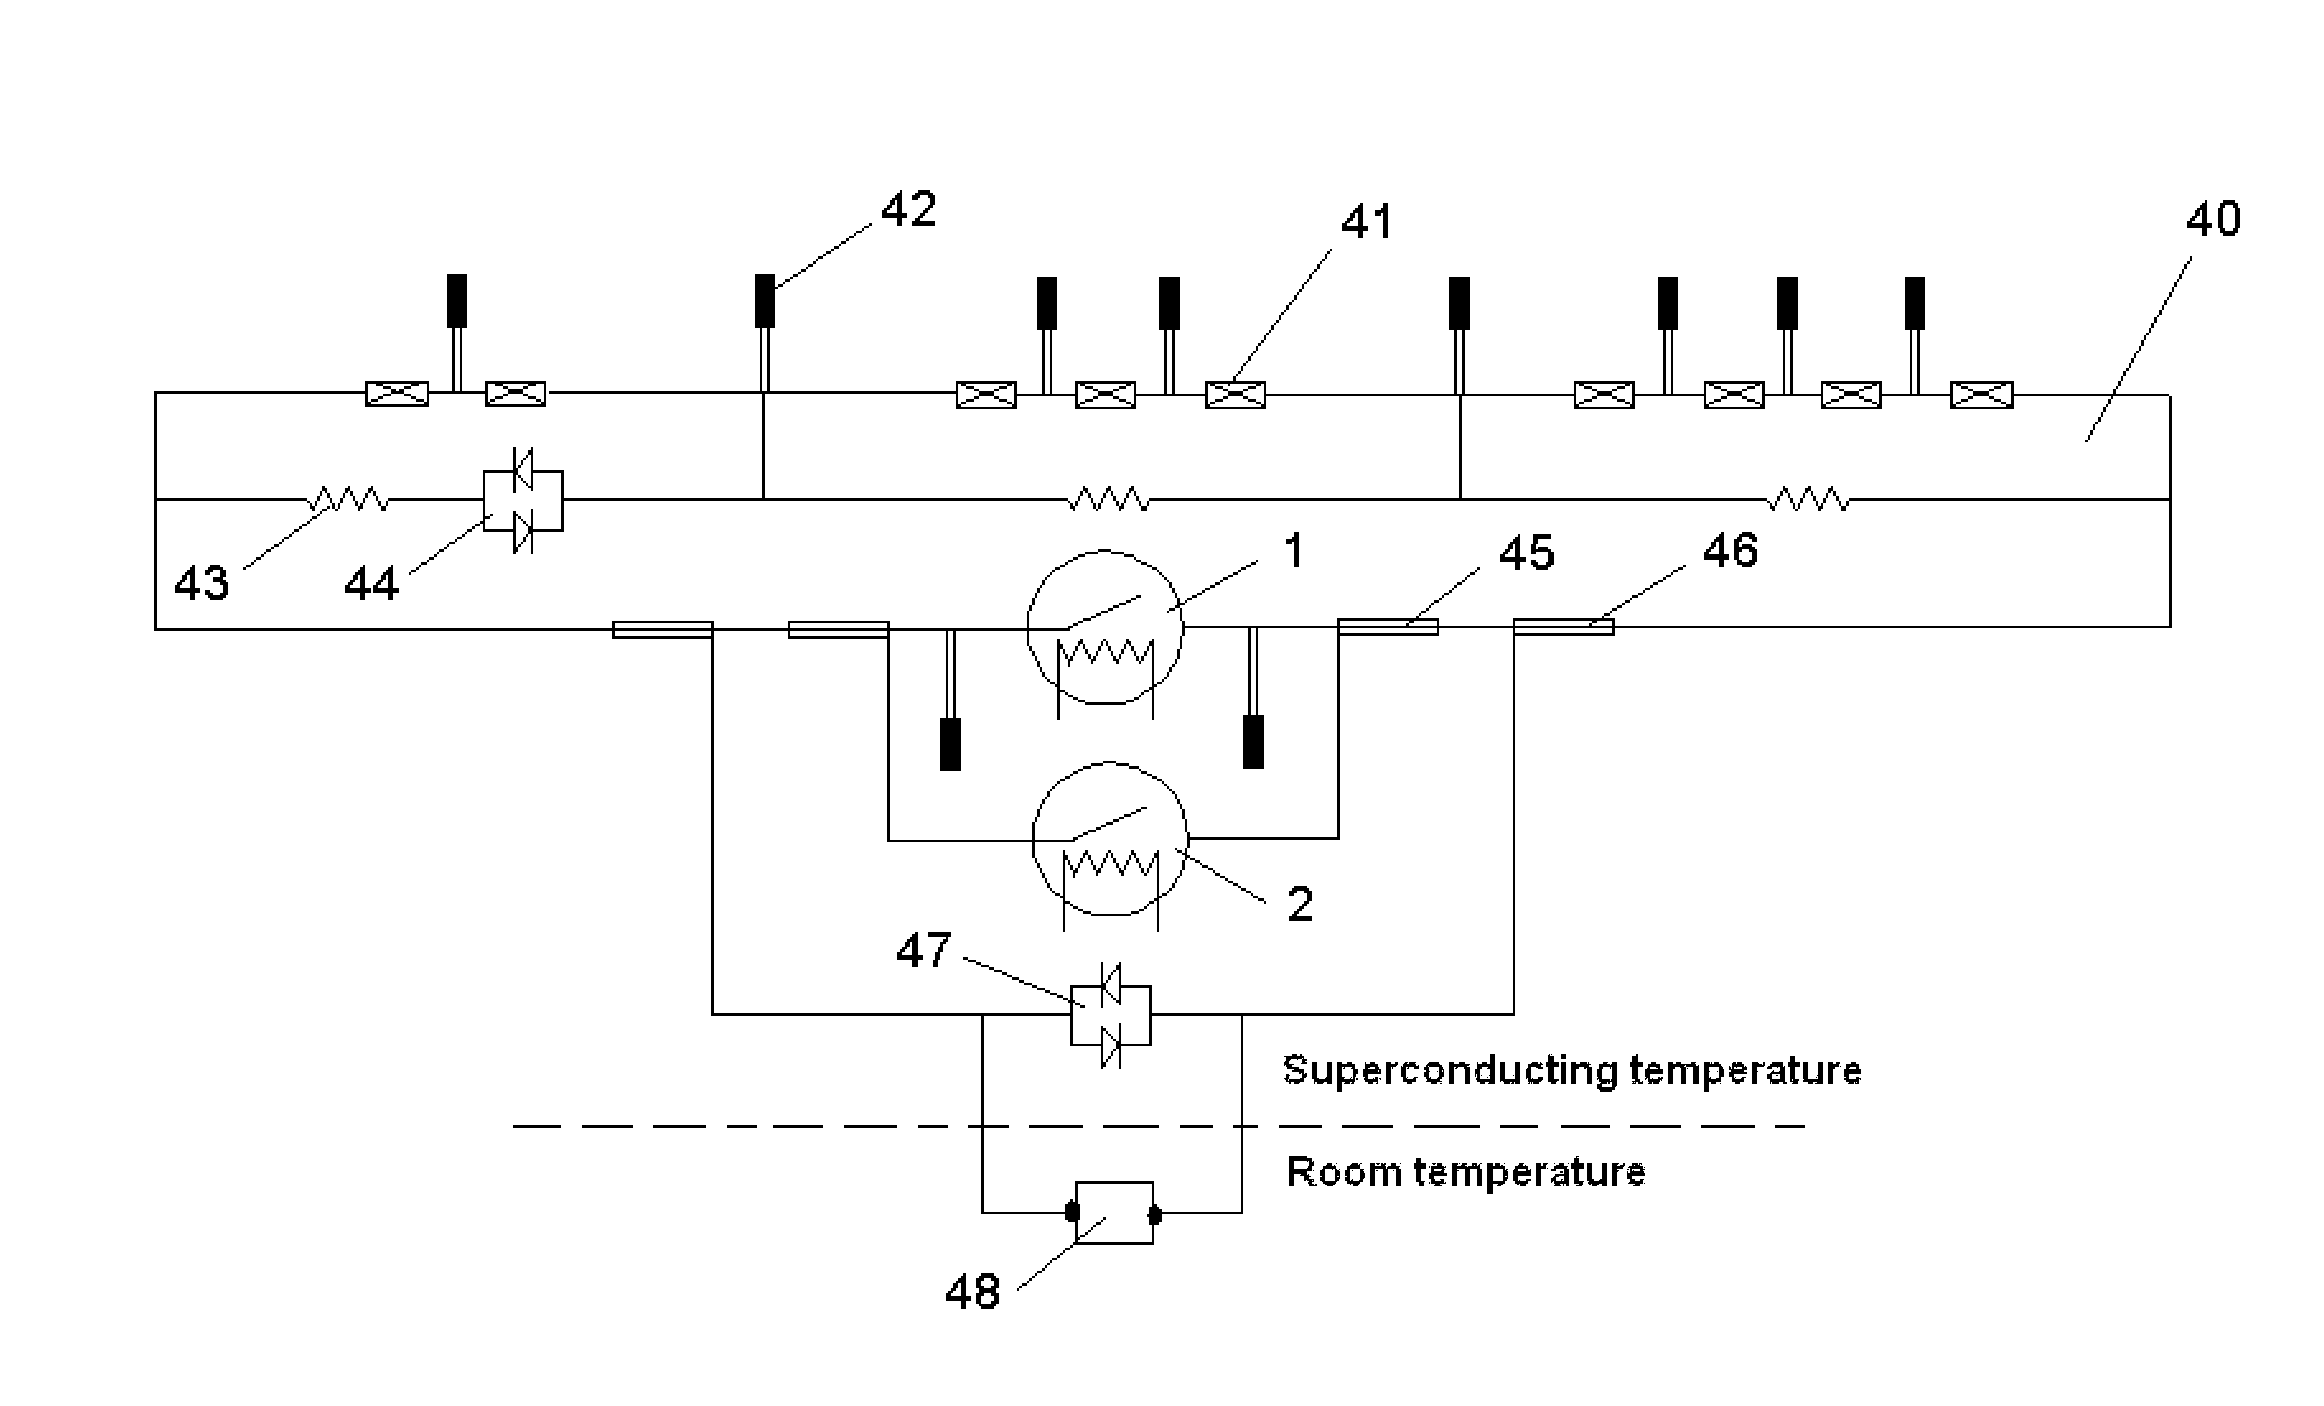 Superconducting switch operation